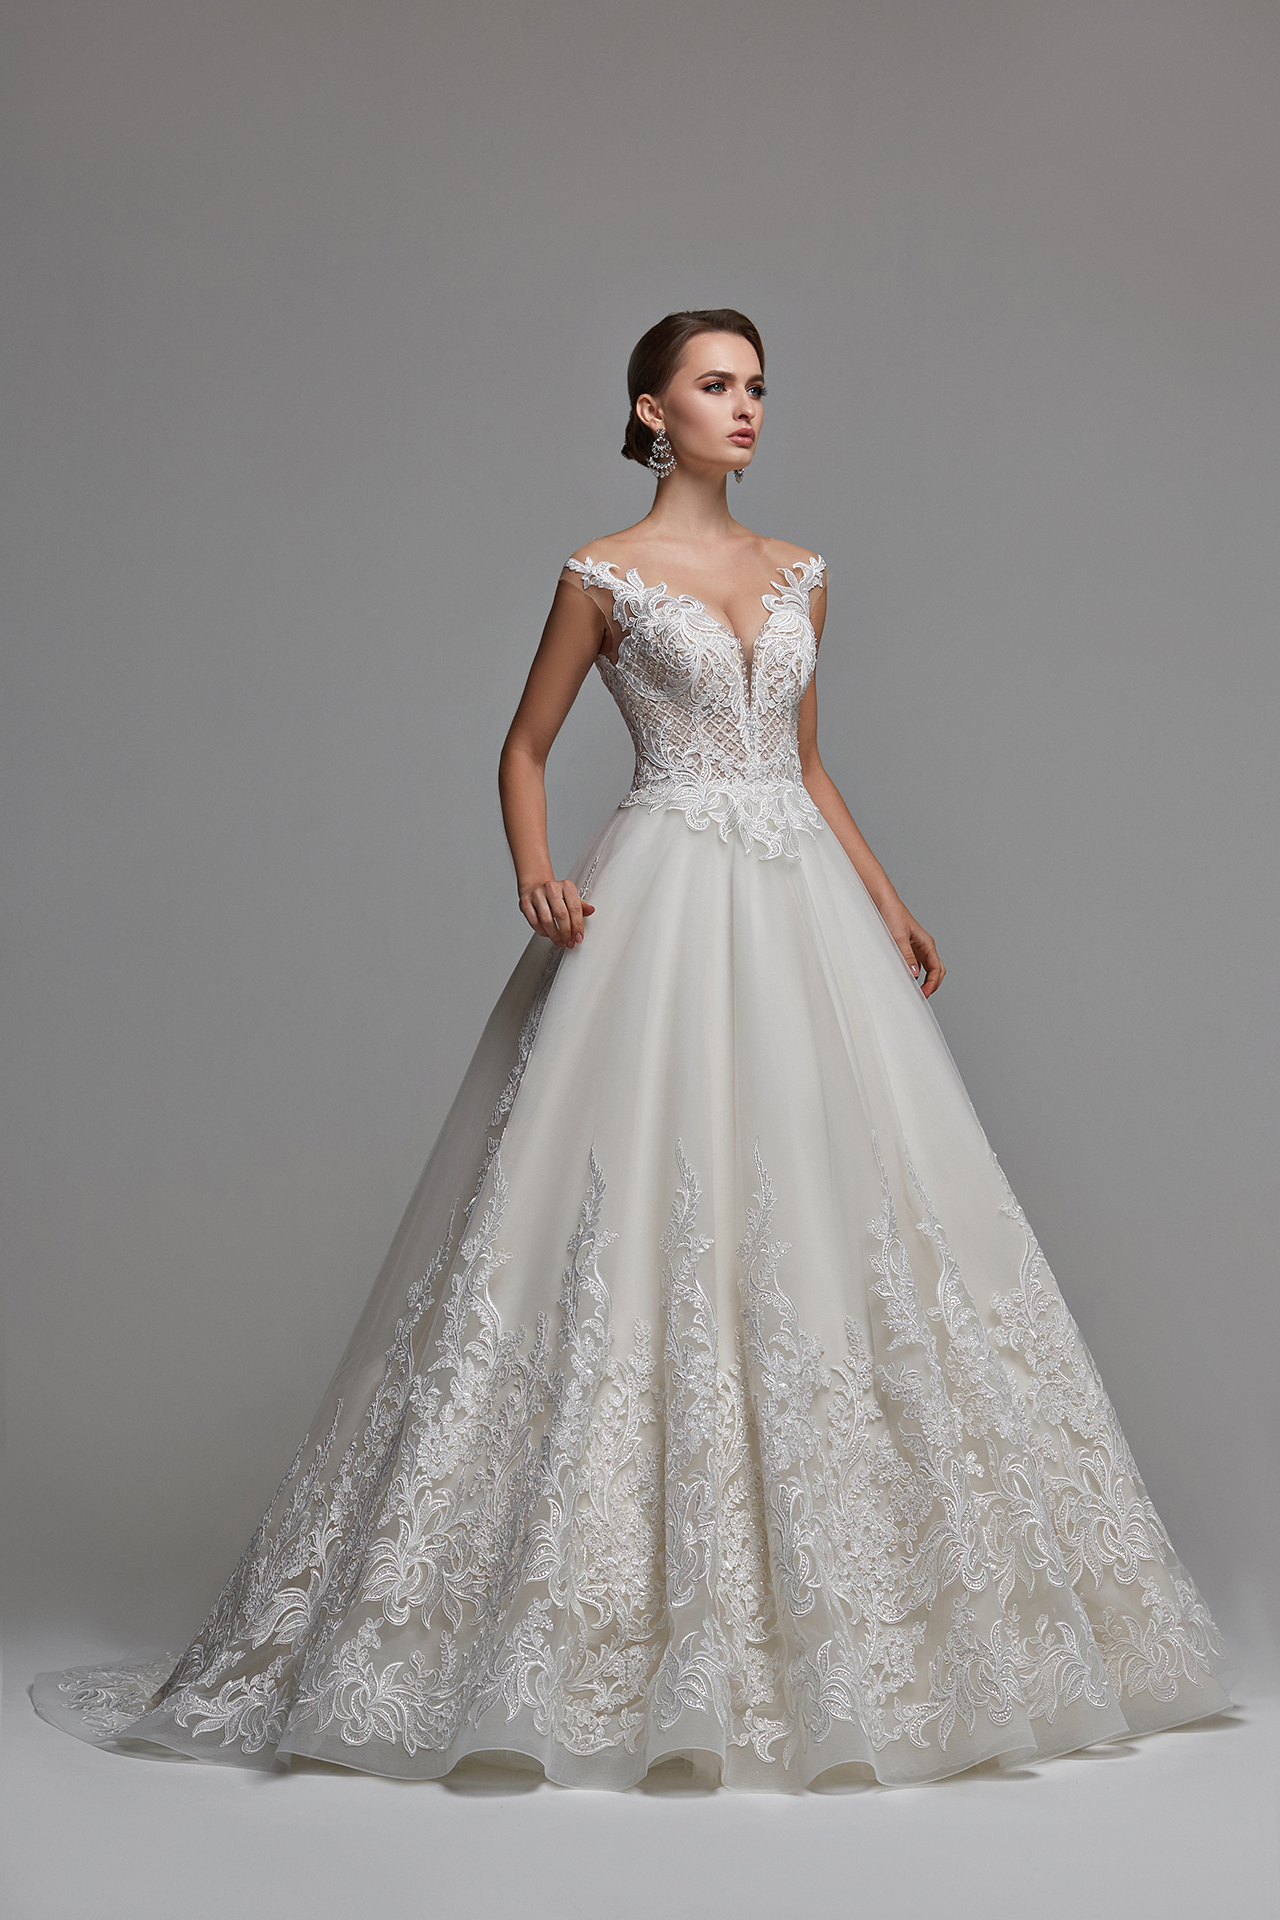 A line lace wedding dress, Low back tulle wedding dress, Tulle ball gown wedding dress, Lace overlay wedding dress, Monica